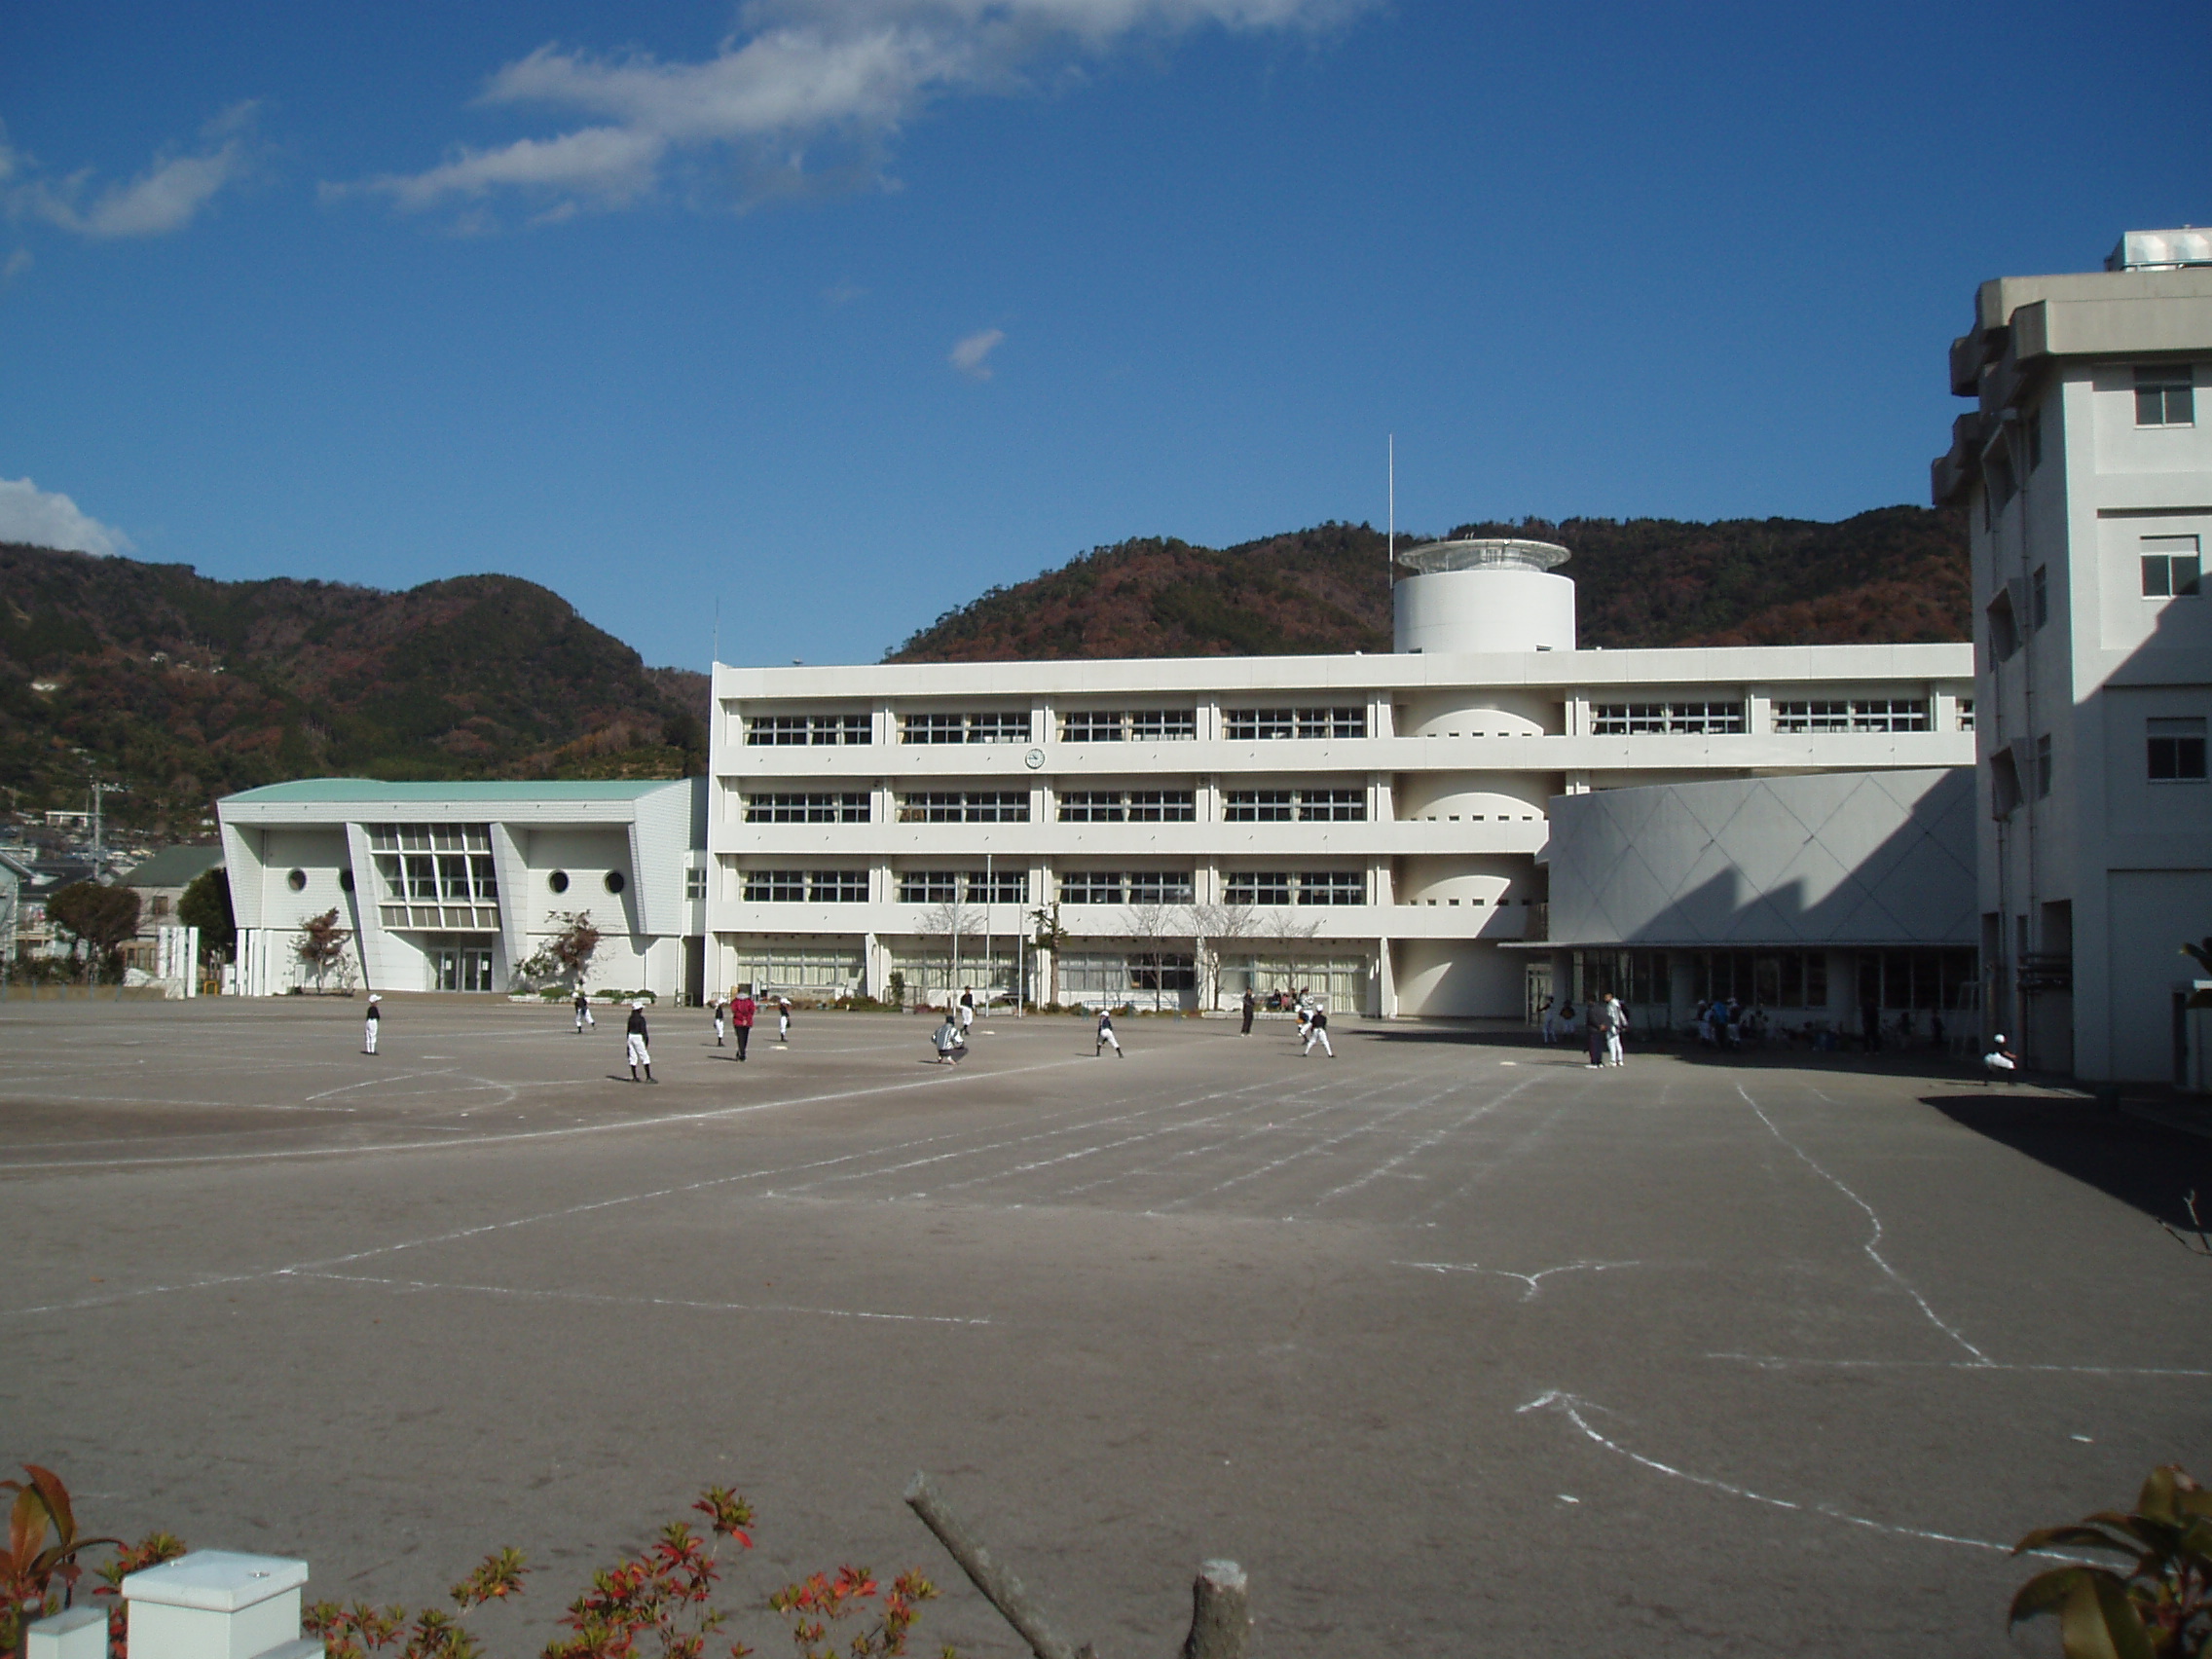 Primary school. 614m to Ito City Usami elementary school (elementary school)